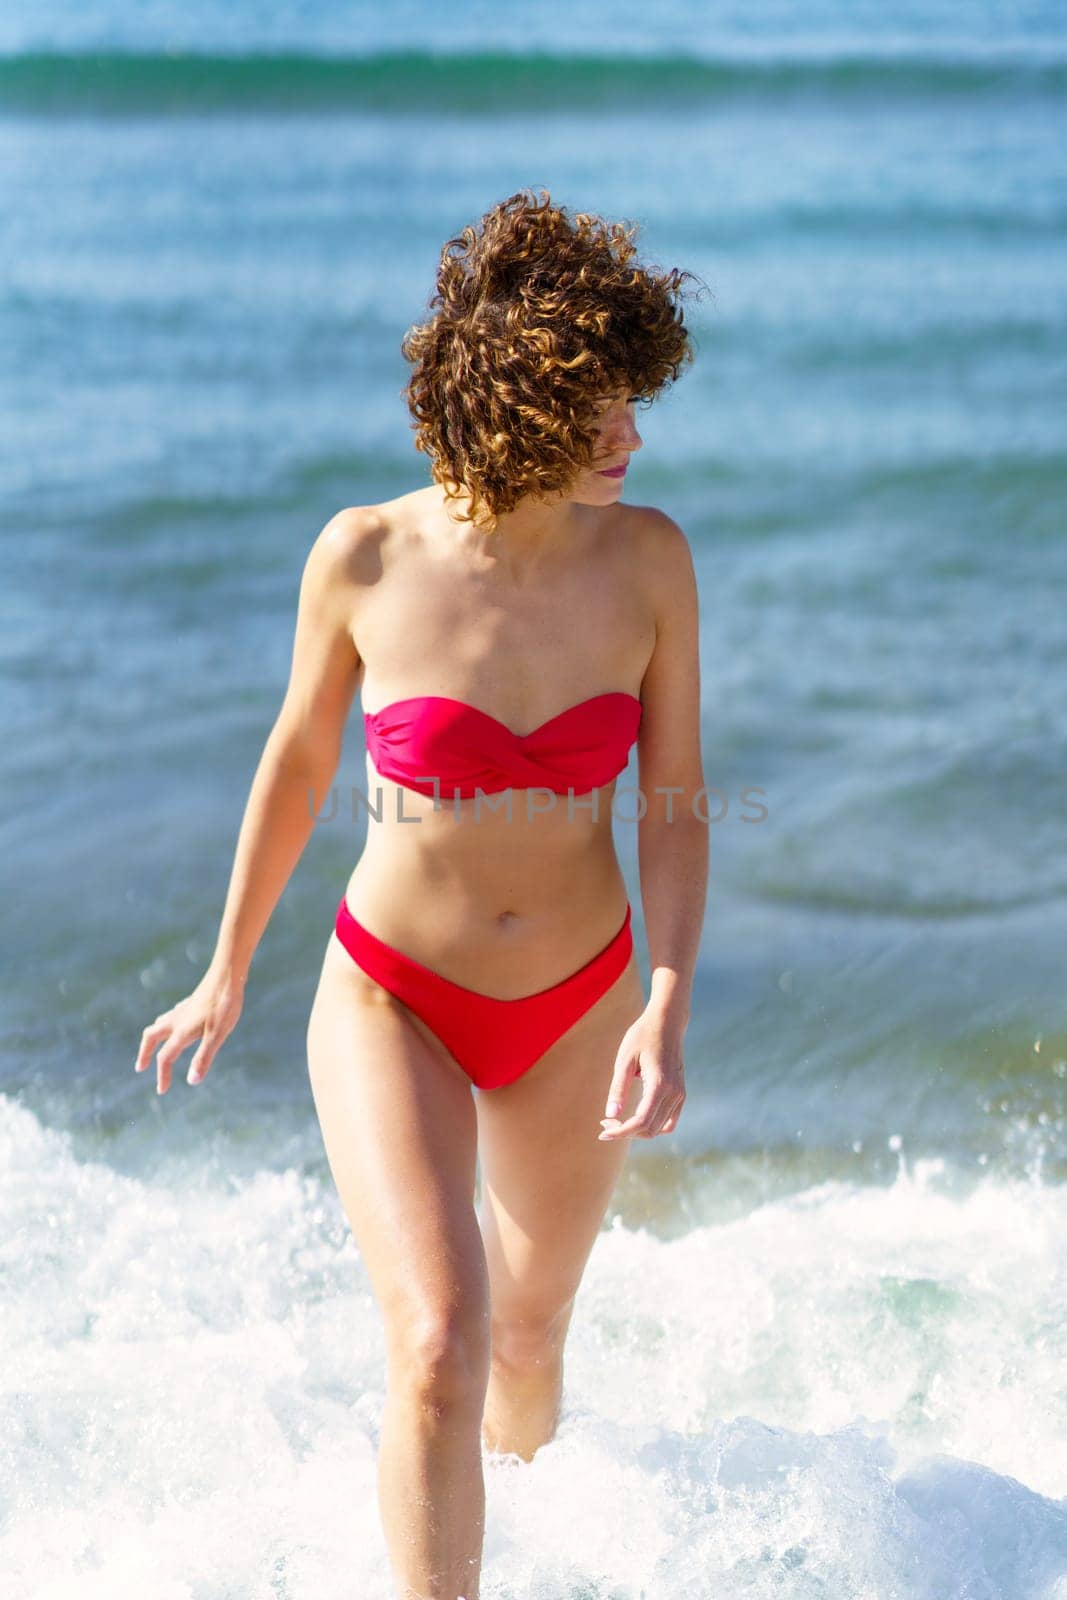 Female in swimwear walking in ocean water at beach by javiindy